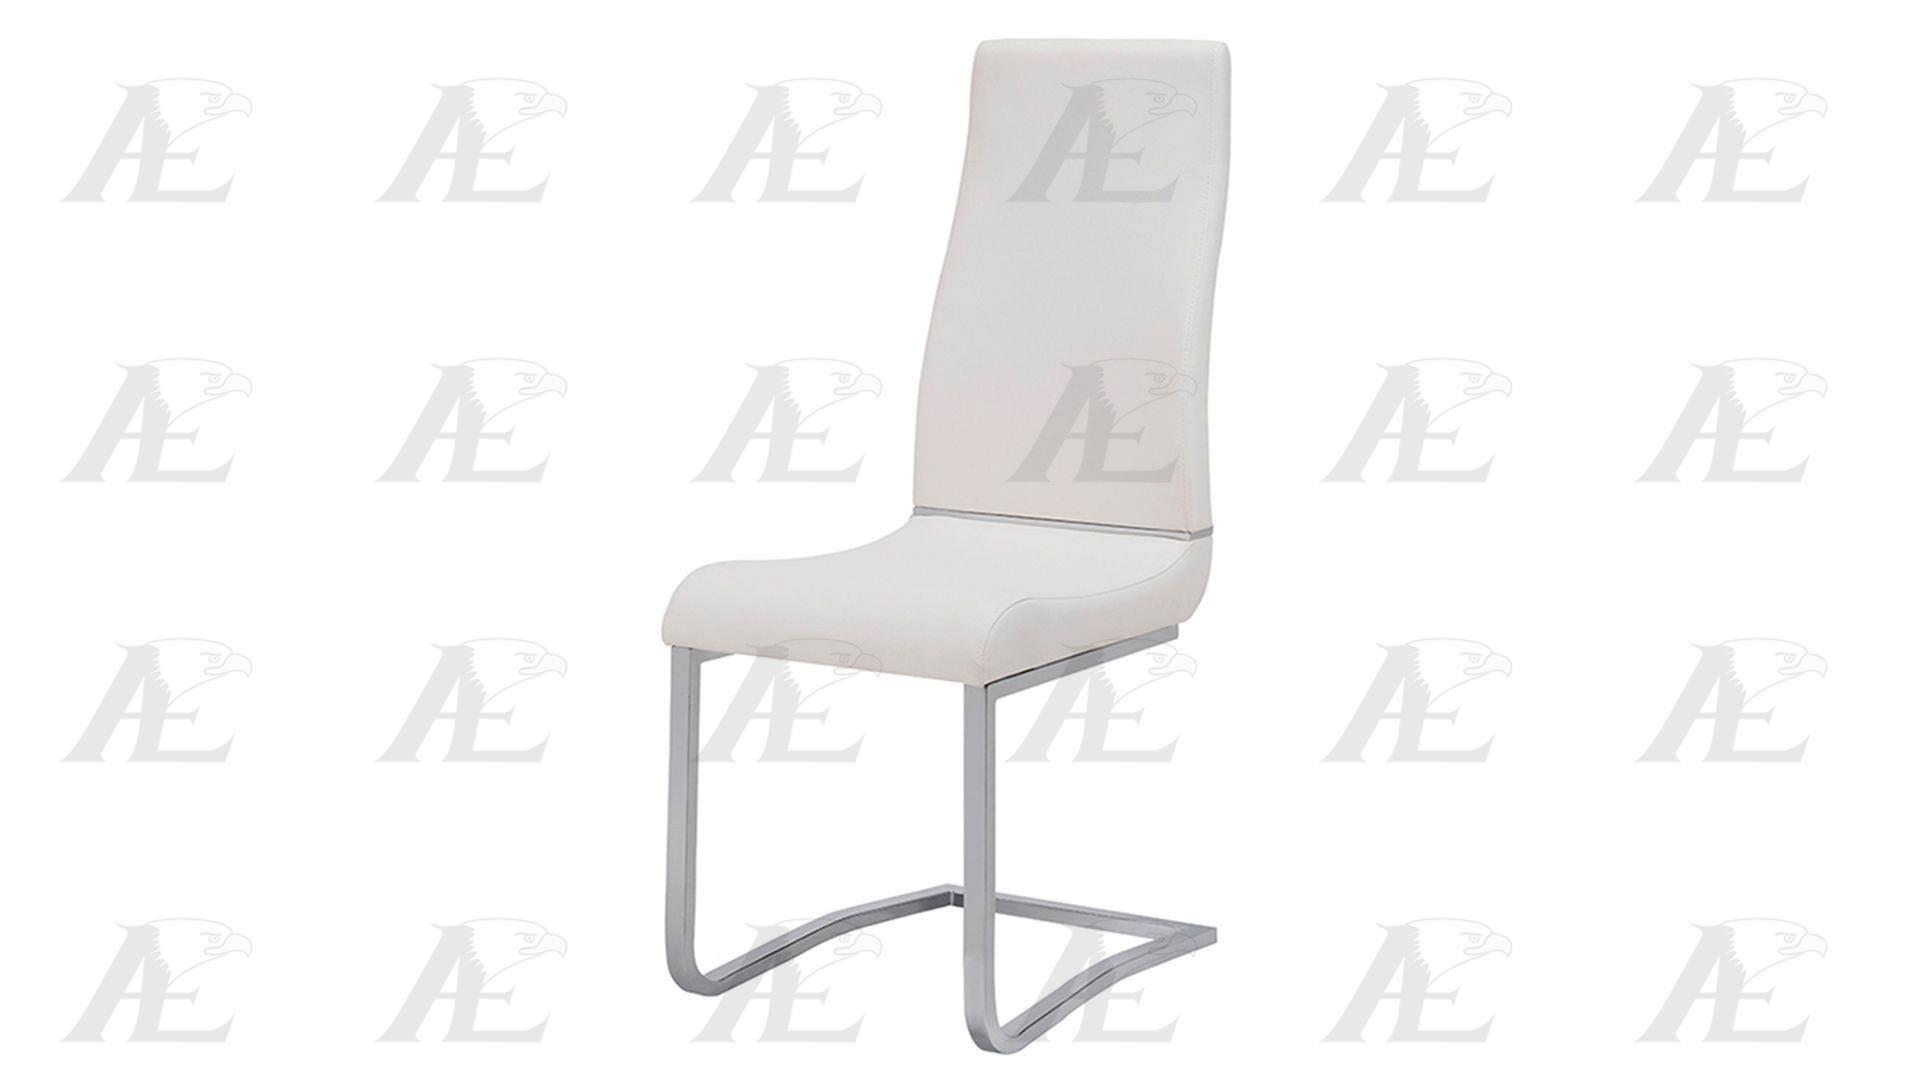 

    
American Eagle Furniture CK-1532C-W White PU Dining Chair Set 6Pcs
